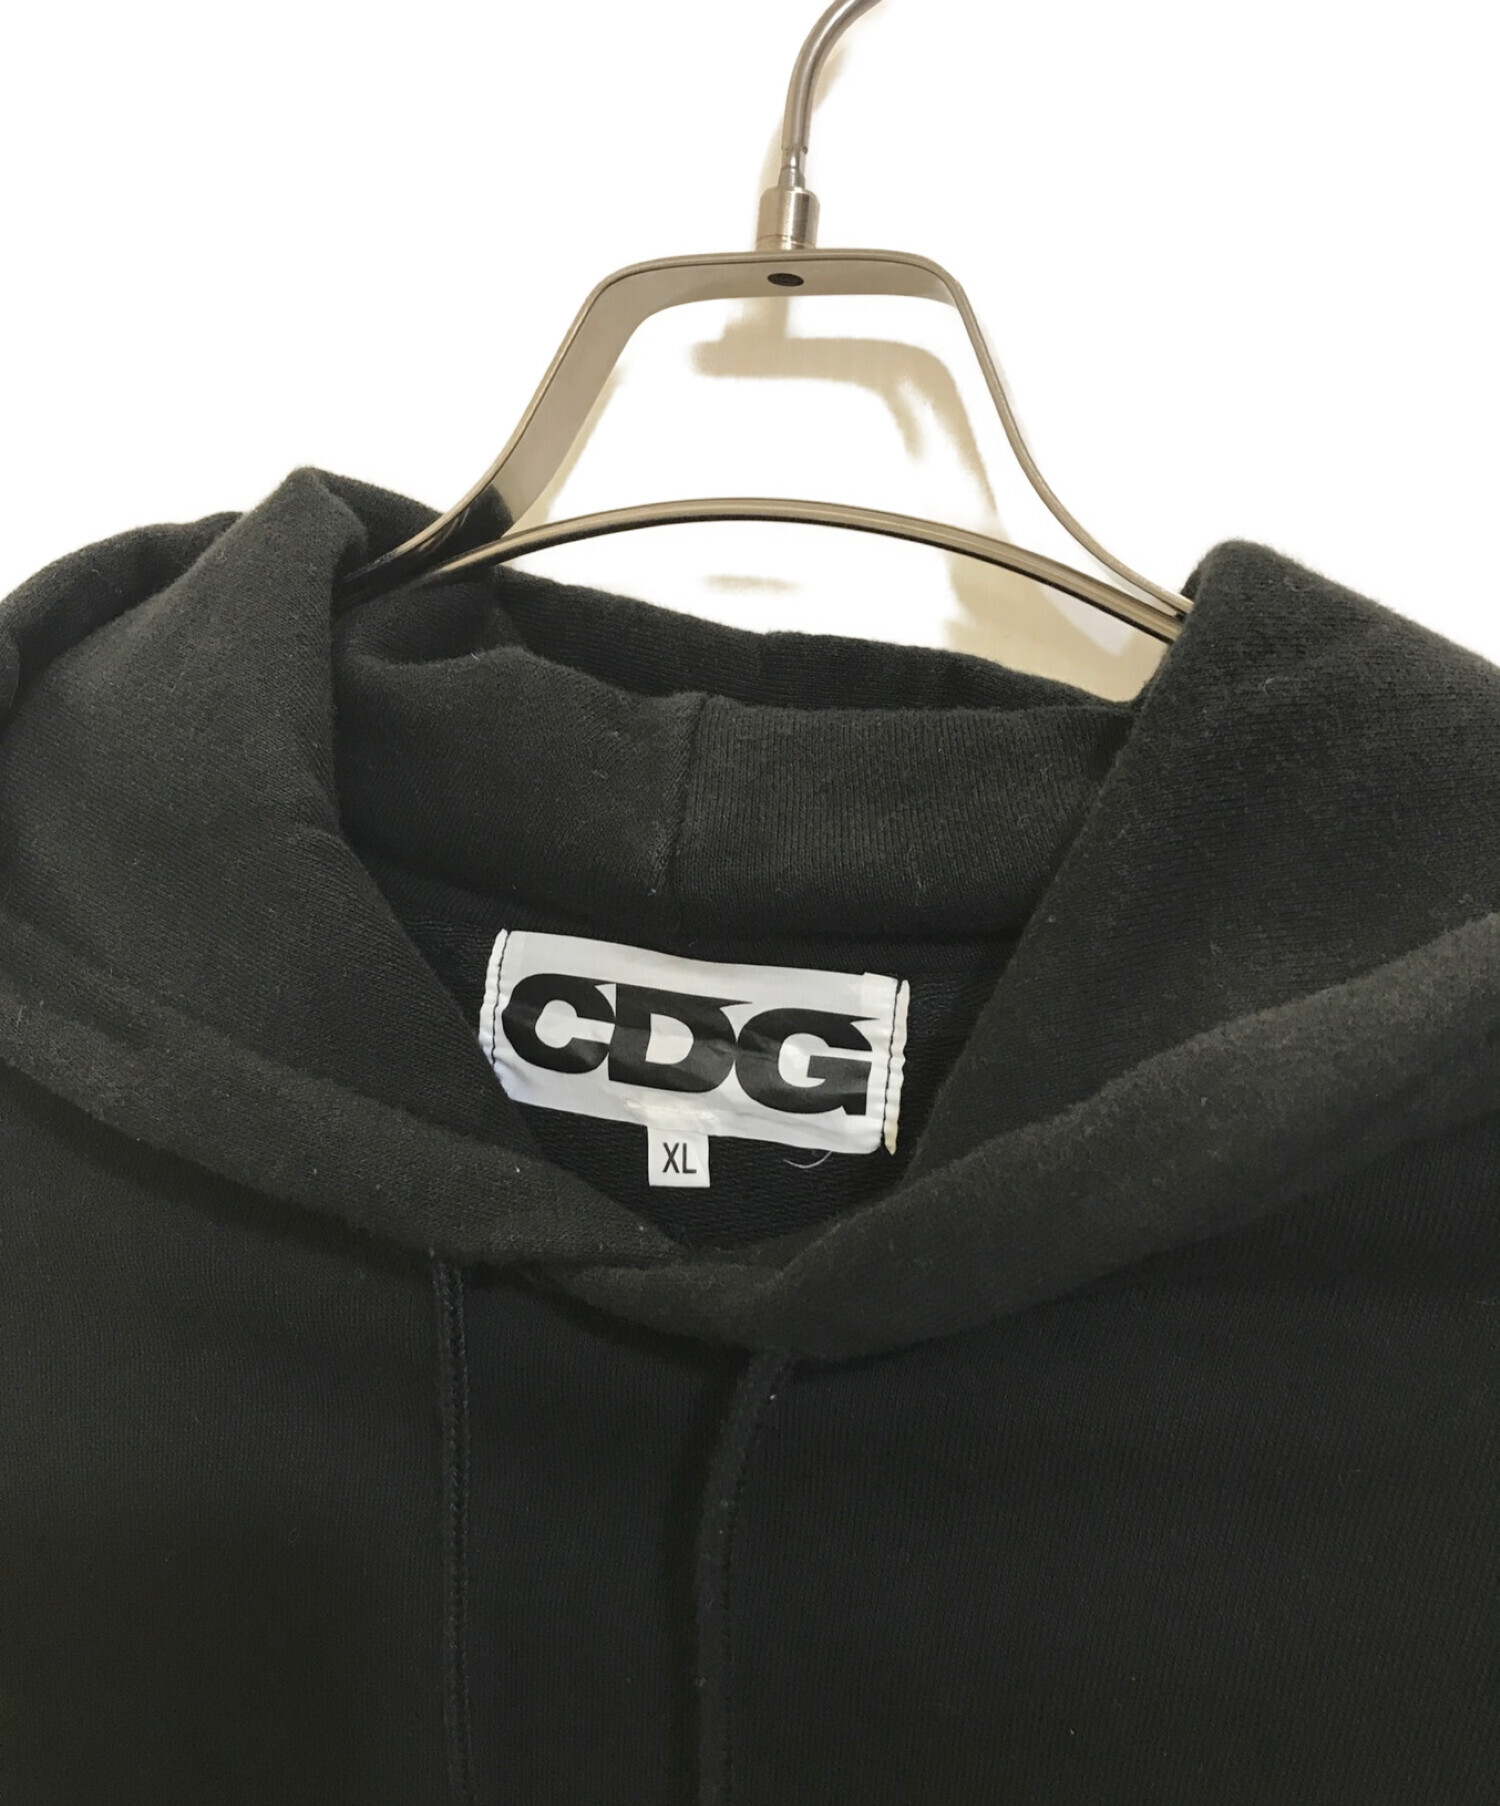 CDG (シーディージー) ロゴプルオーバーパーカー ブラック サイズ:XL